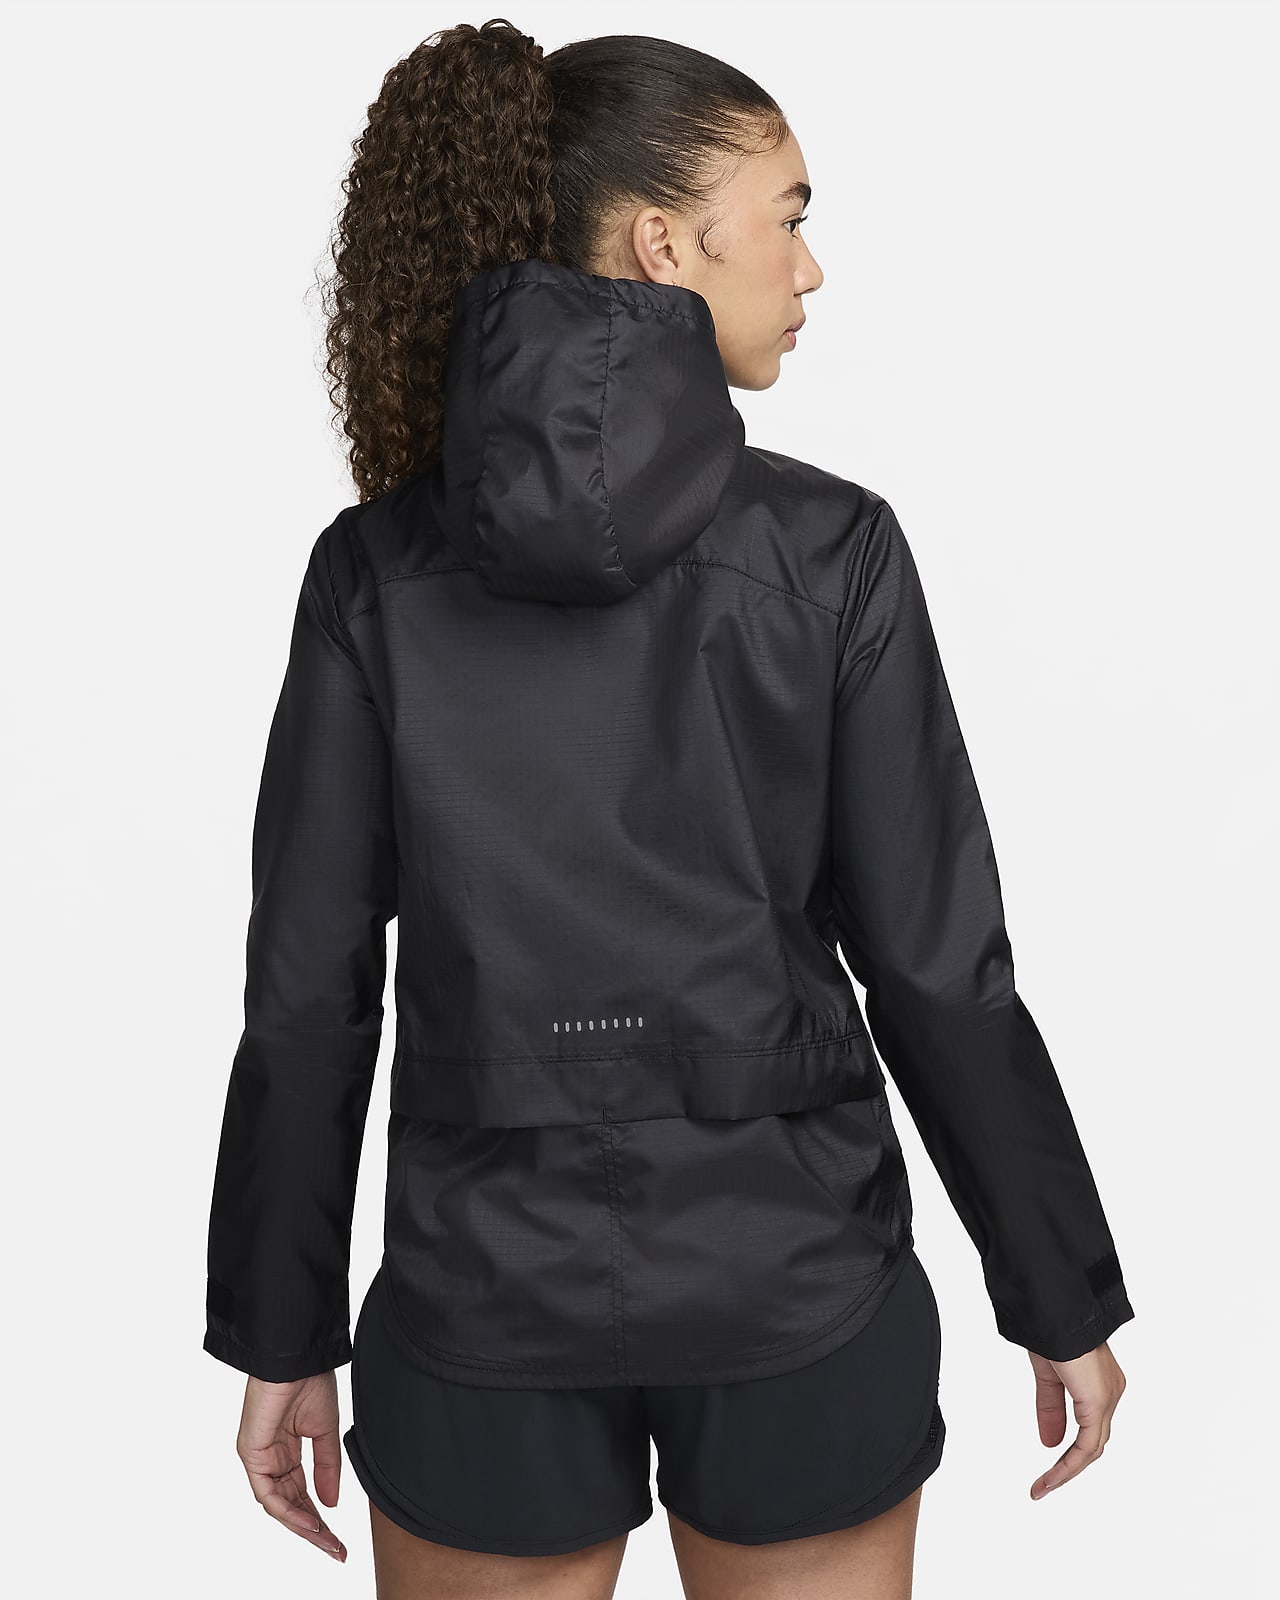 Nike Essential Women's Running Jacket.